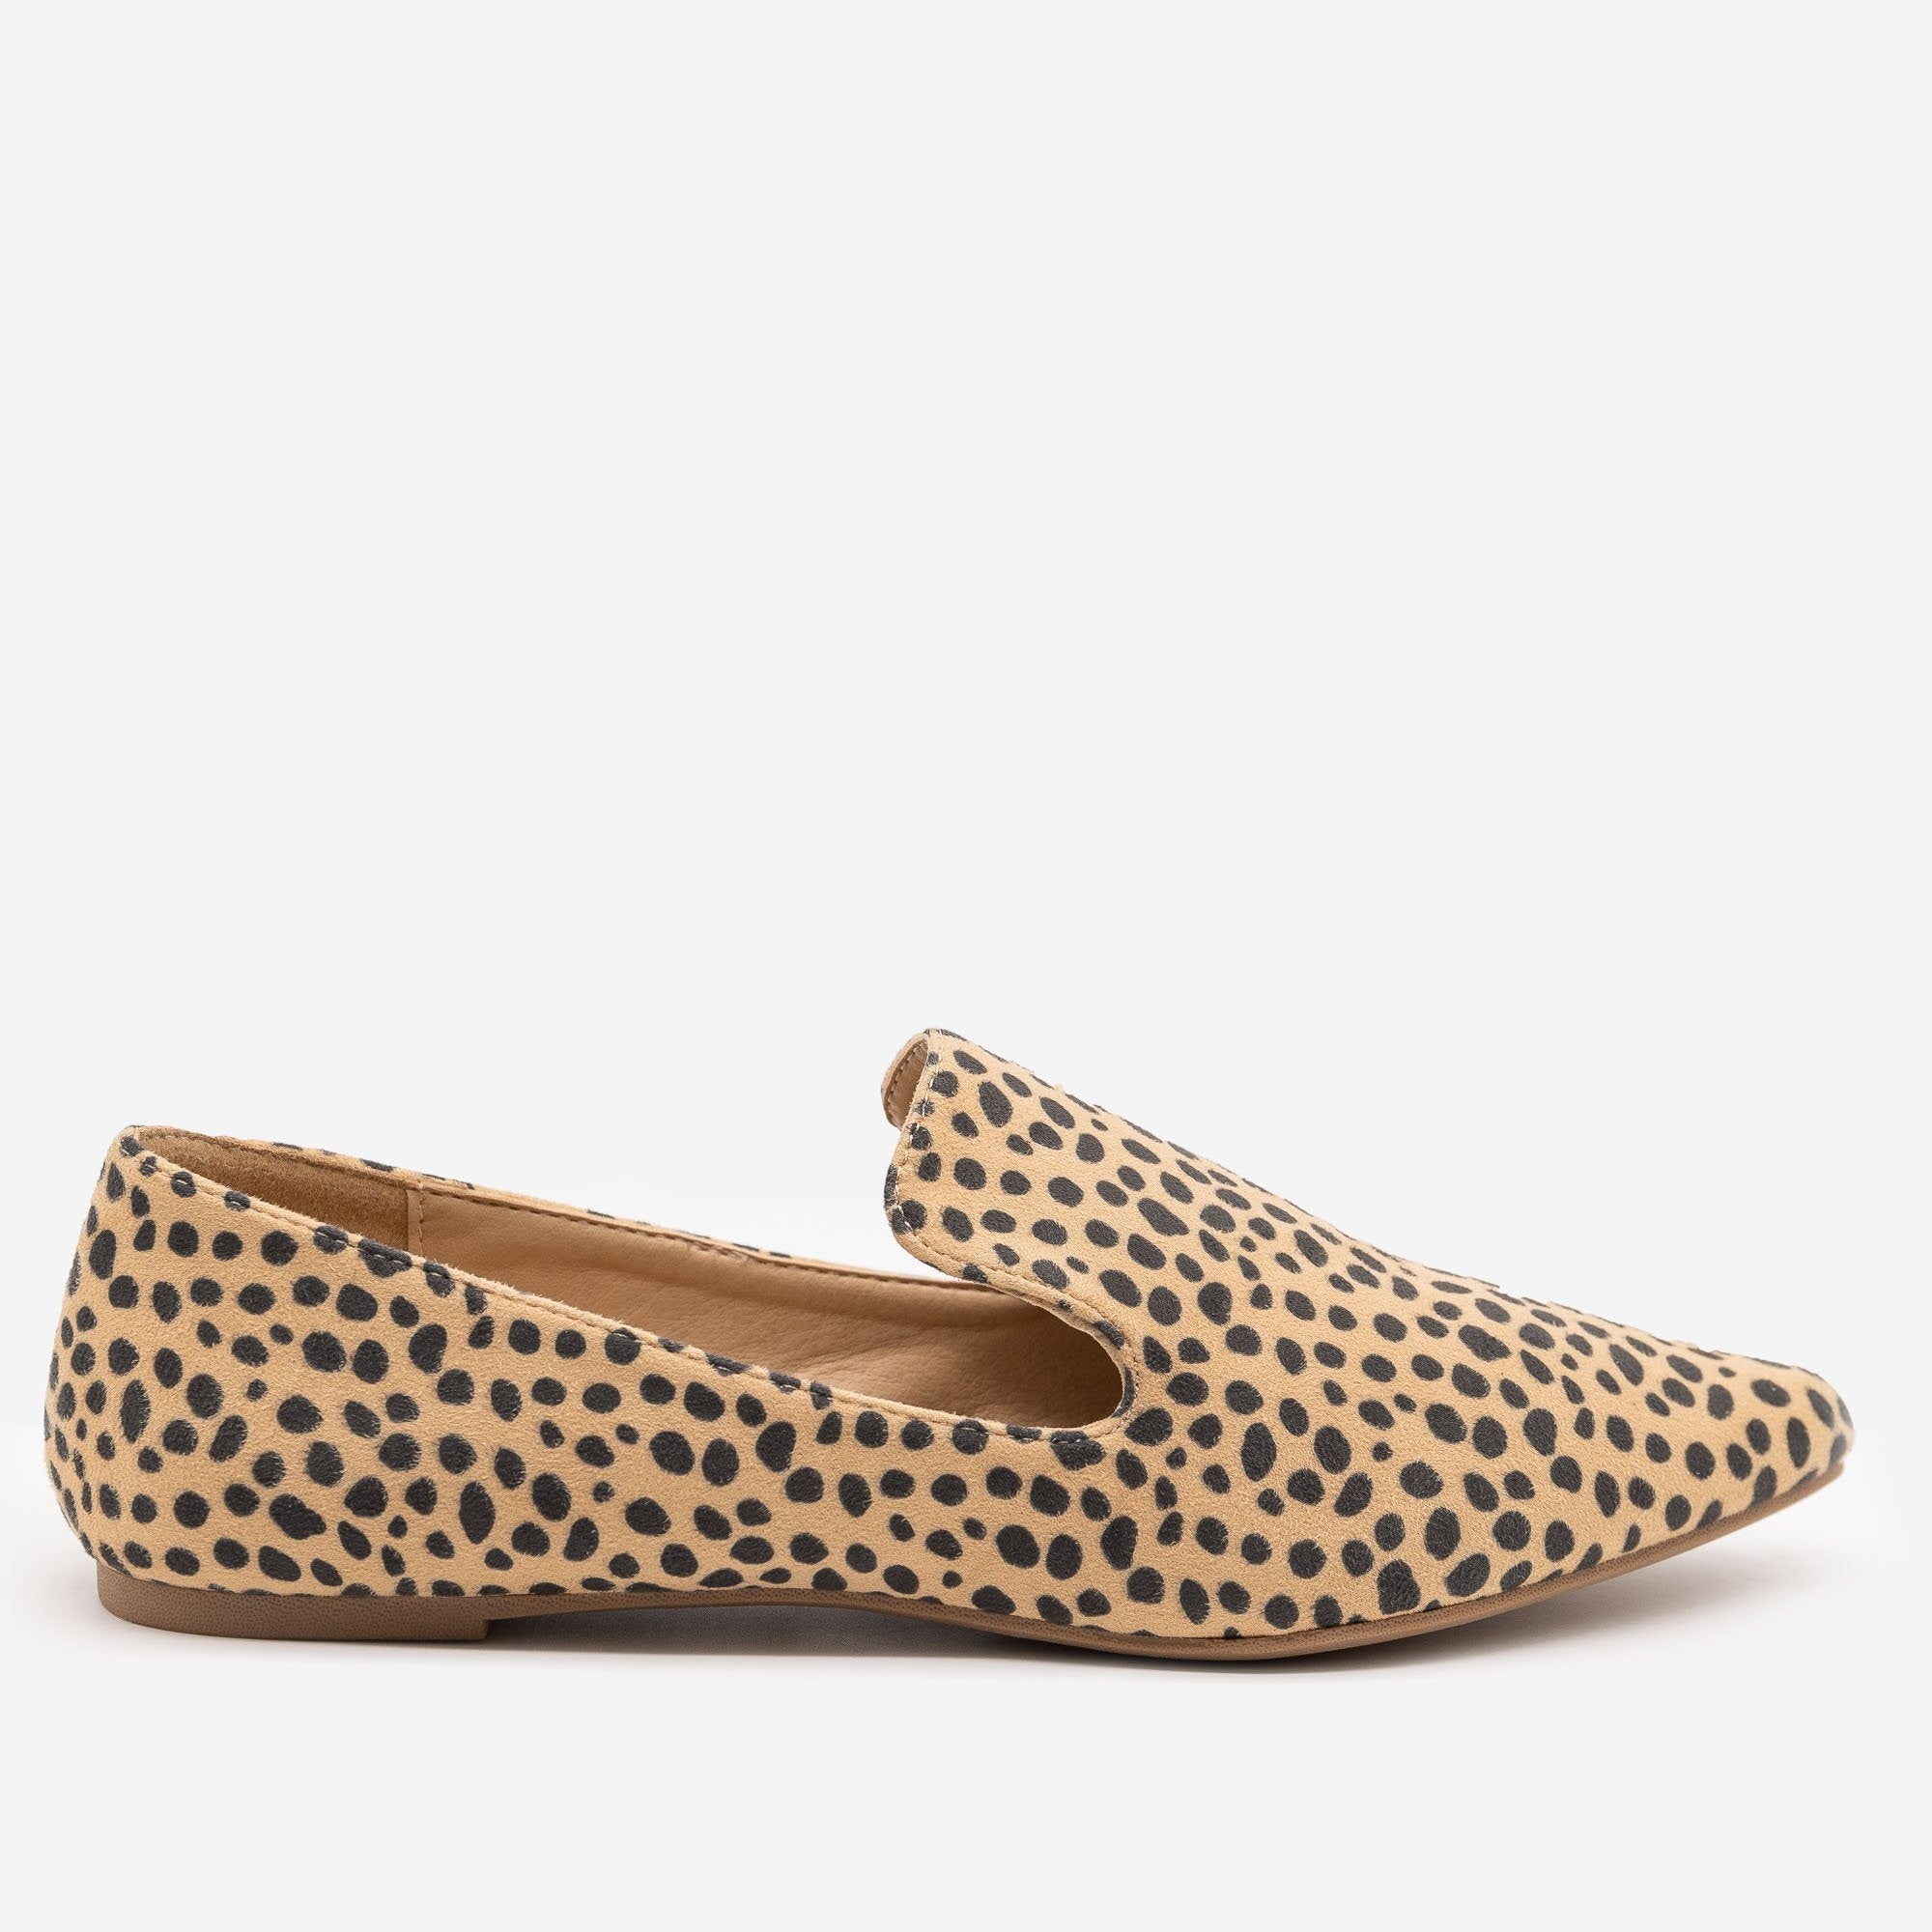 Cheetah Print Loafers - Mata Shoes Nova 